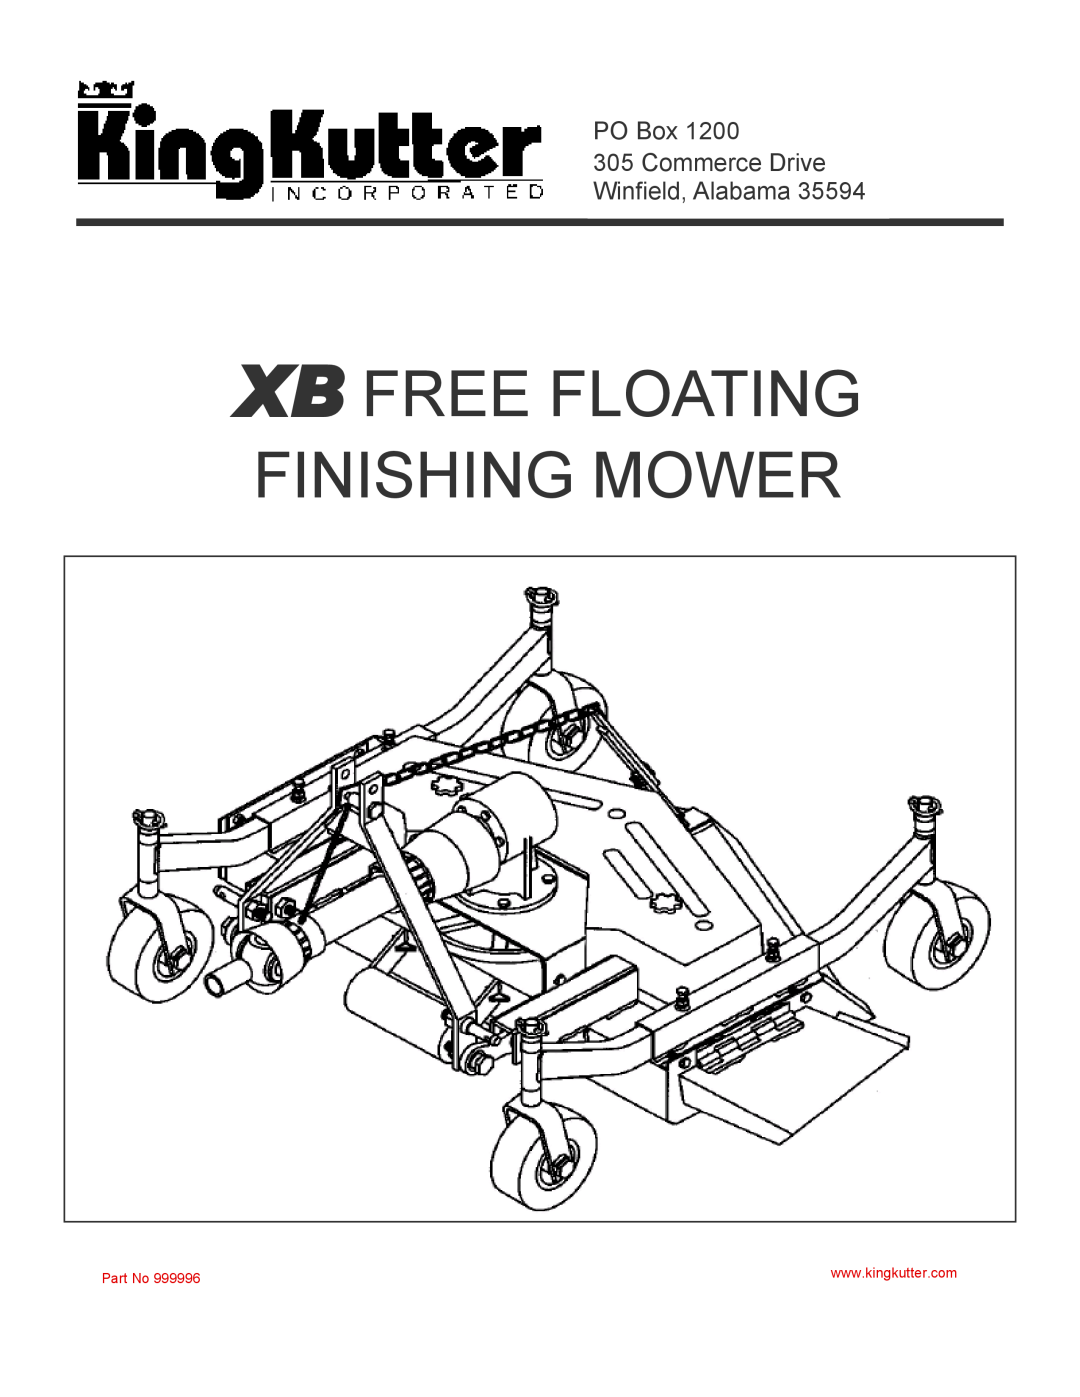 King Kutter 999996 manual Xb Free Floating Finishing Mower, PO Box 305 Commerce Drive Winfield, Alabama, Part No 